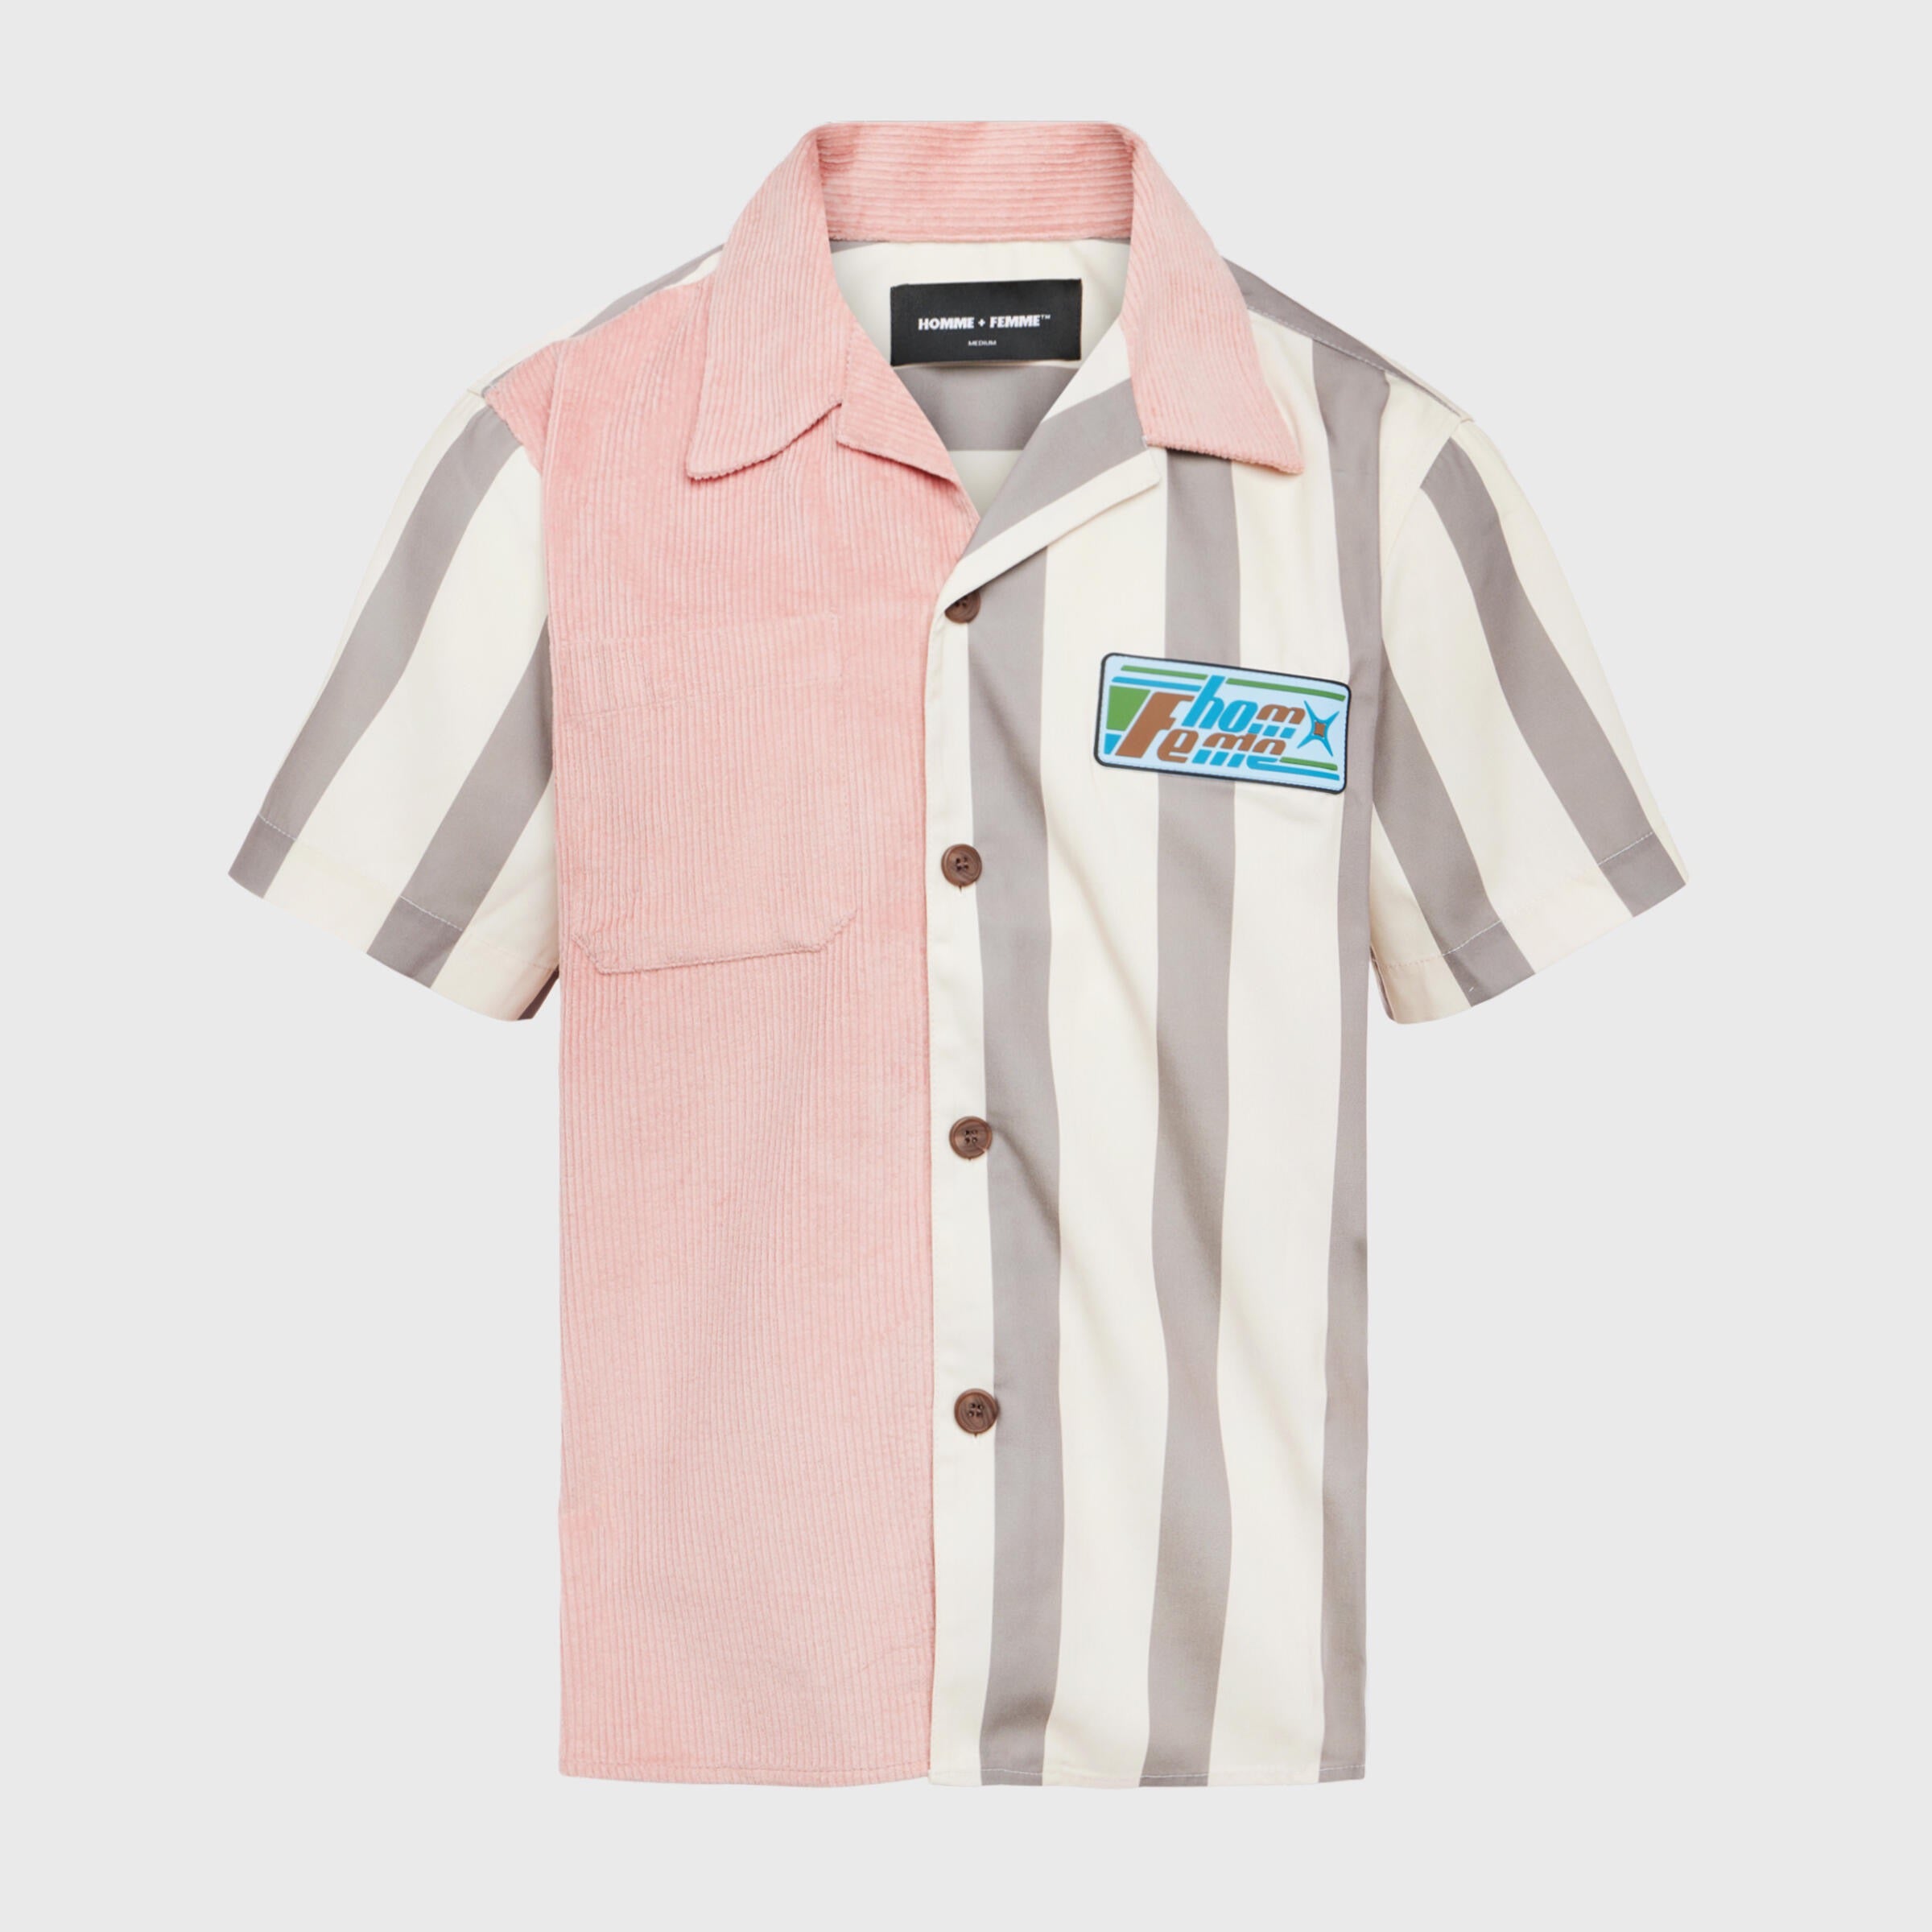 Homme + Femme Button Down Shirt - Paneled Corduroy Striped